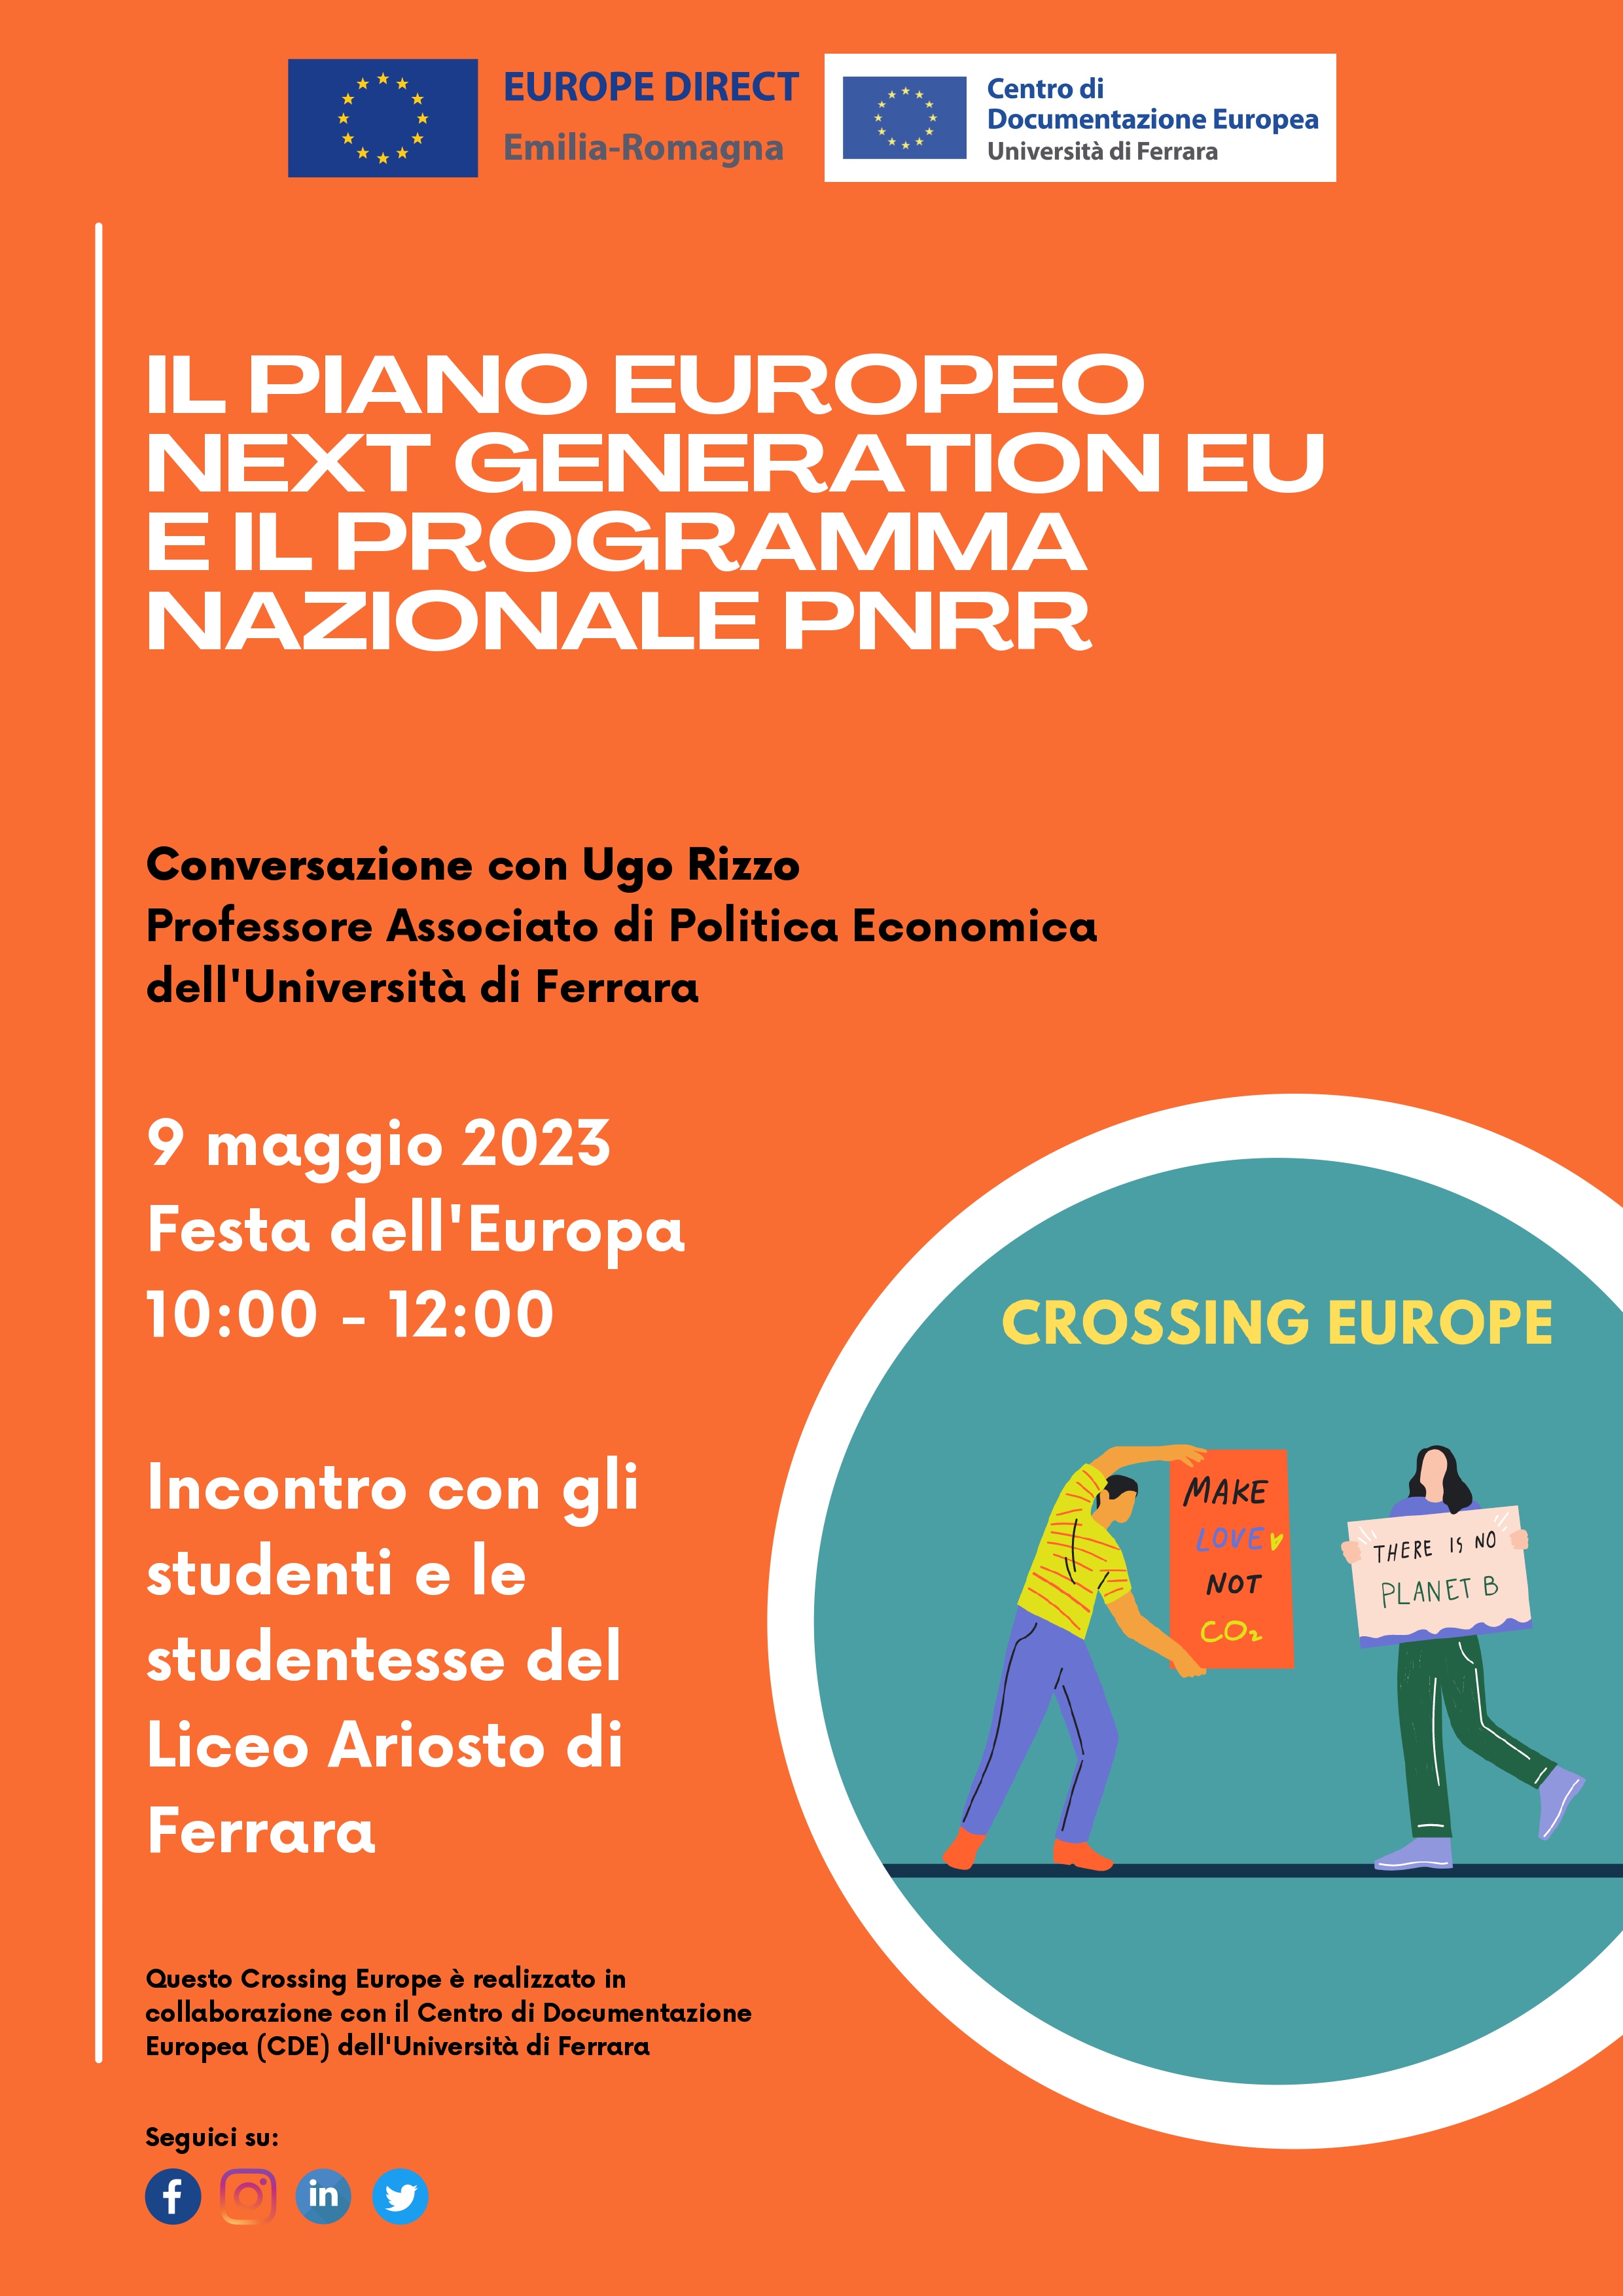 Festa dell'Europa 2023 a Ferrara